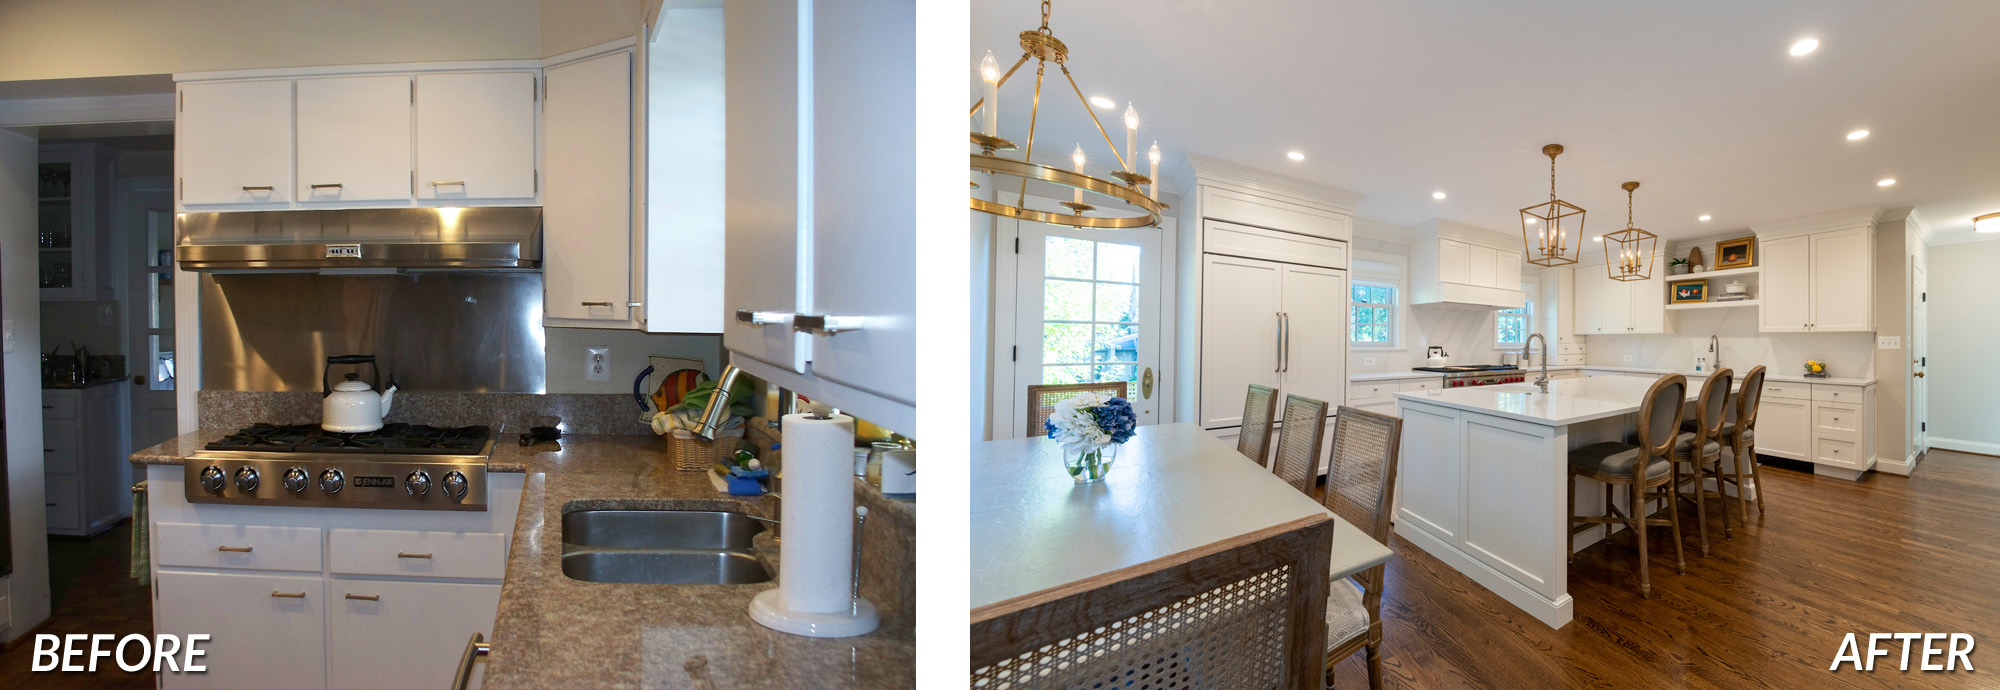 BOWA Design Design Build - Arlington Kitchen Renovation Before & After